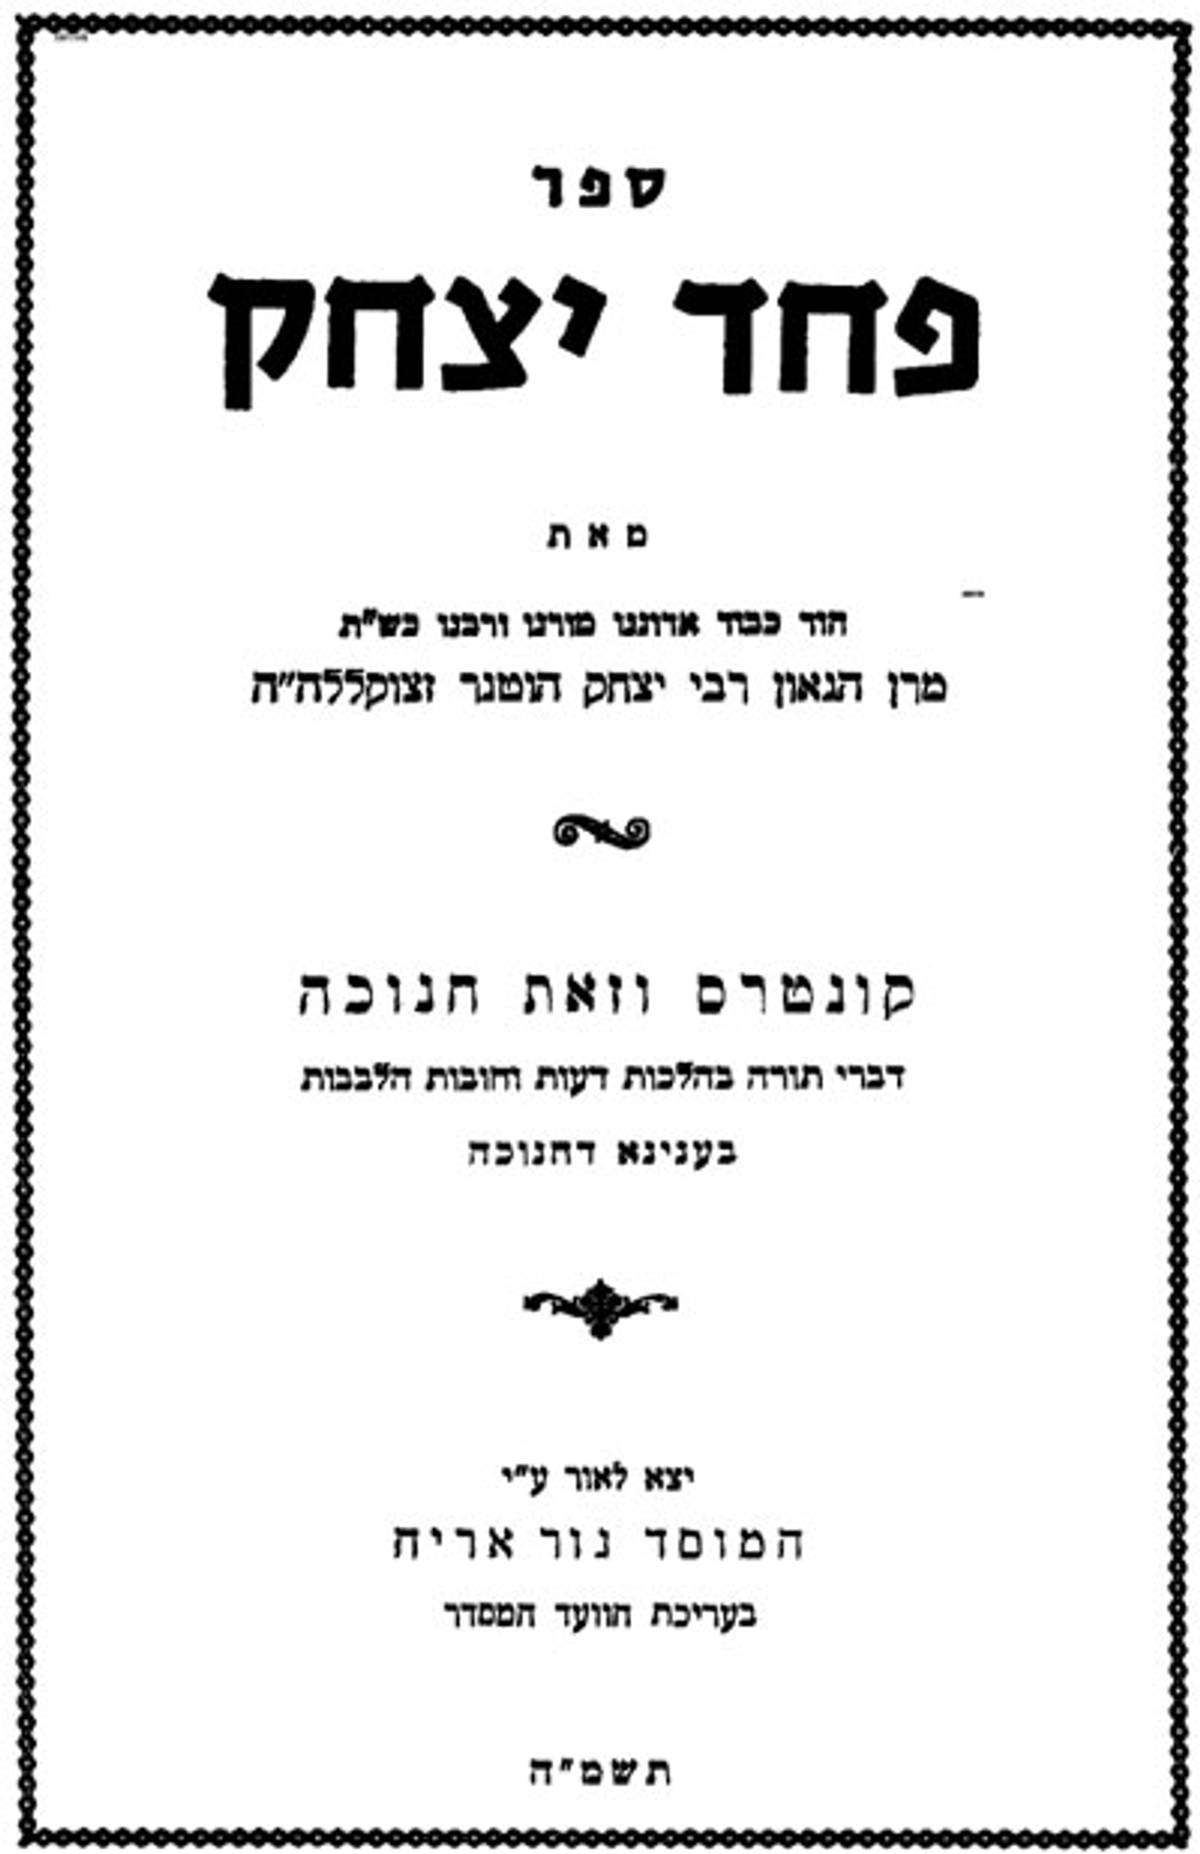 The cover of Pahad Yitzhak.